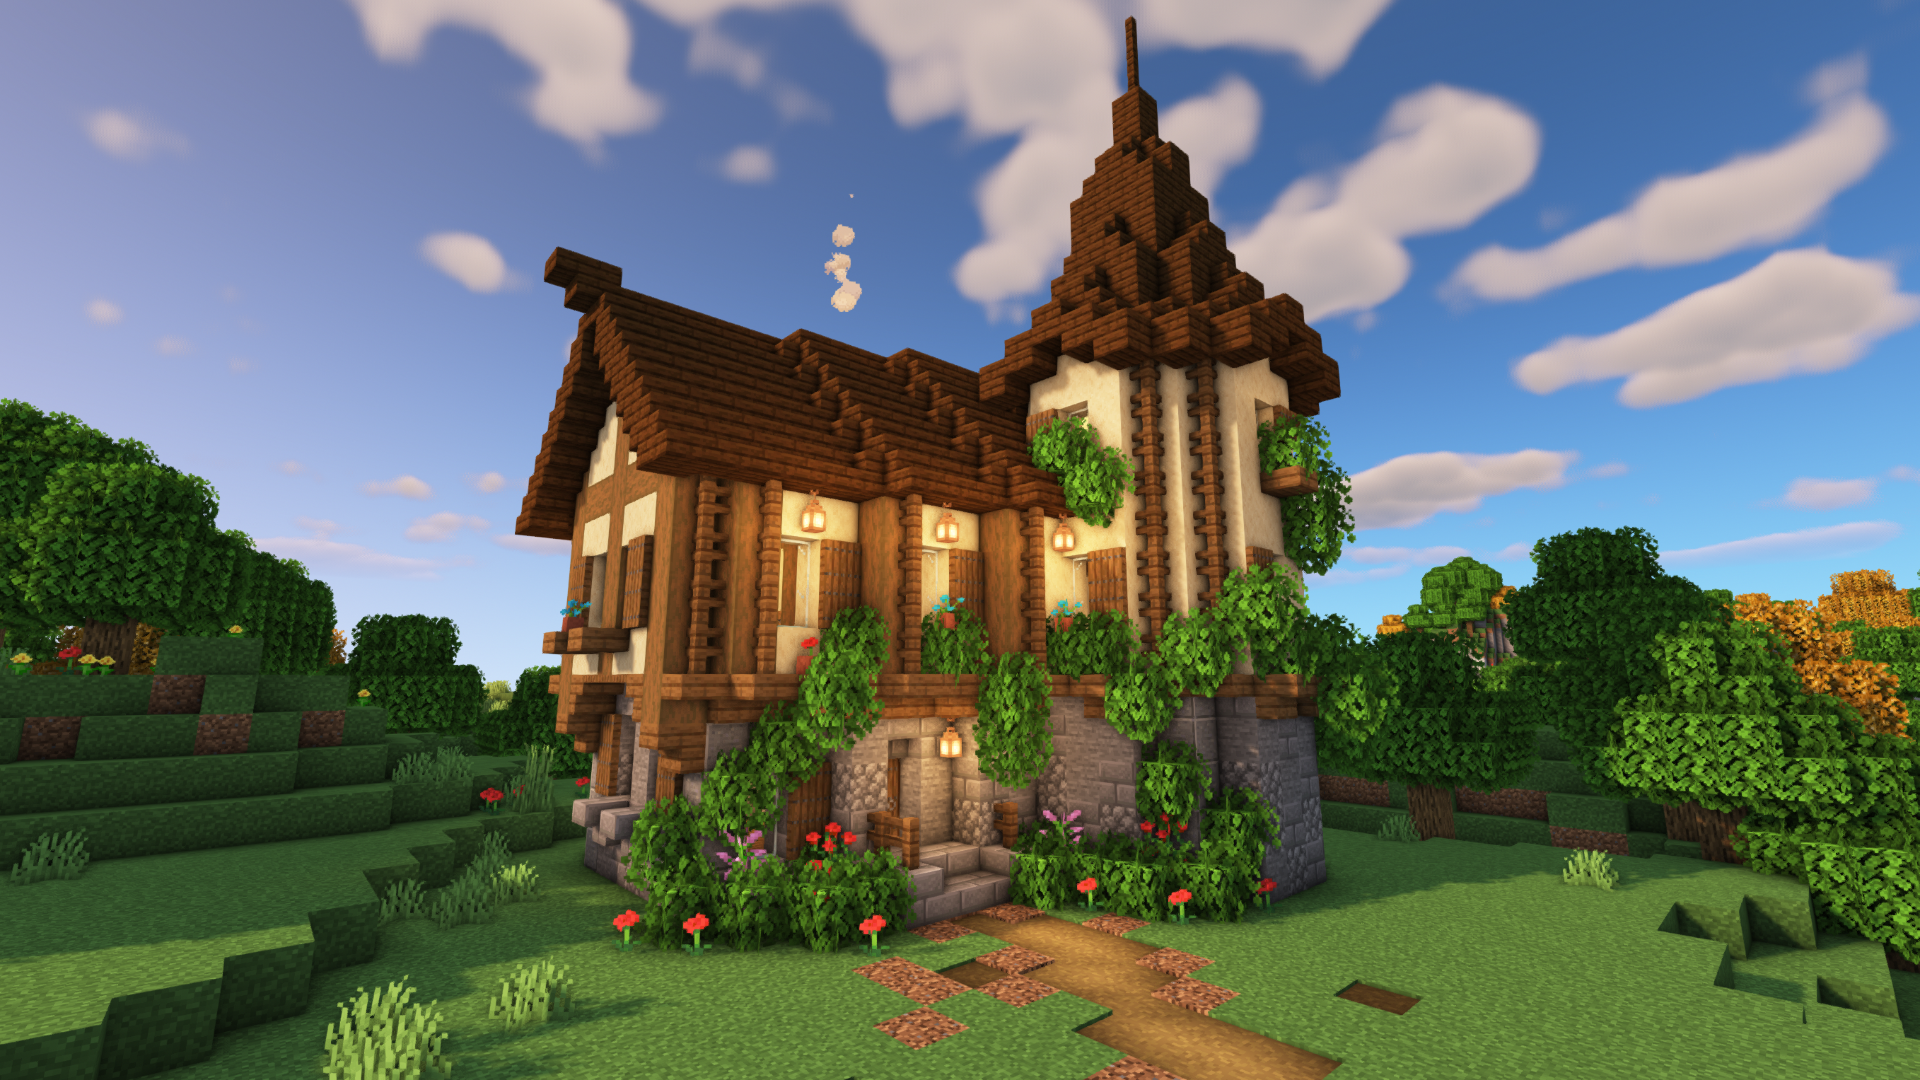 Source For Minecraft Buildings Blueprints Minecraft House Designs Minecraft Woode...